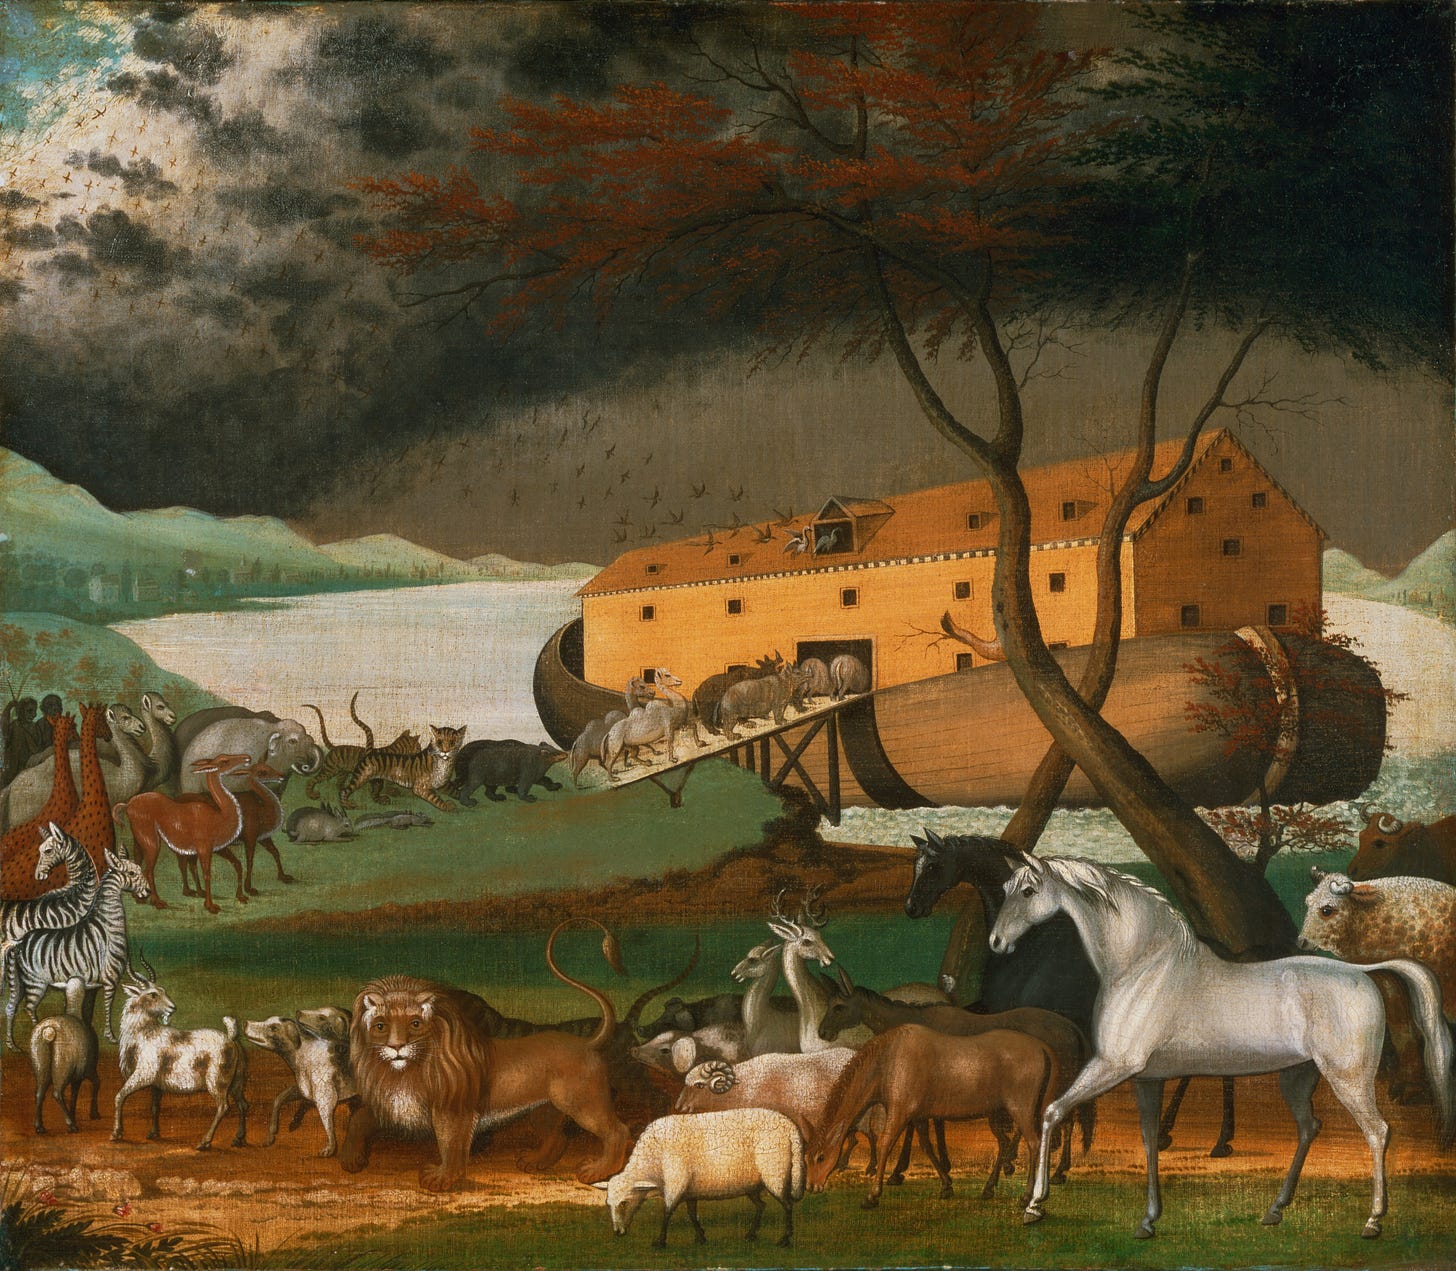 Noah's Ark - Wikipedia